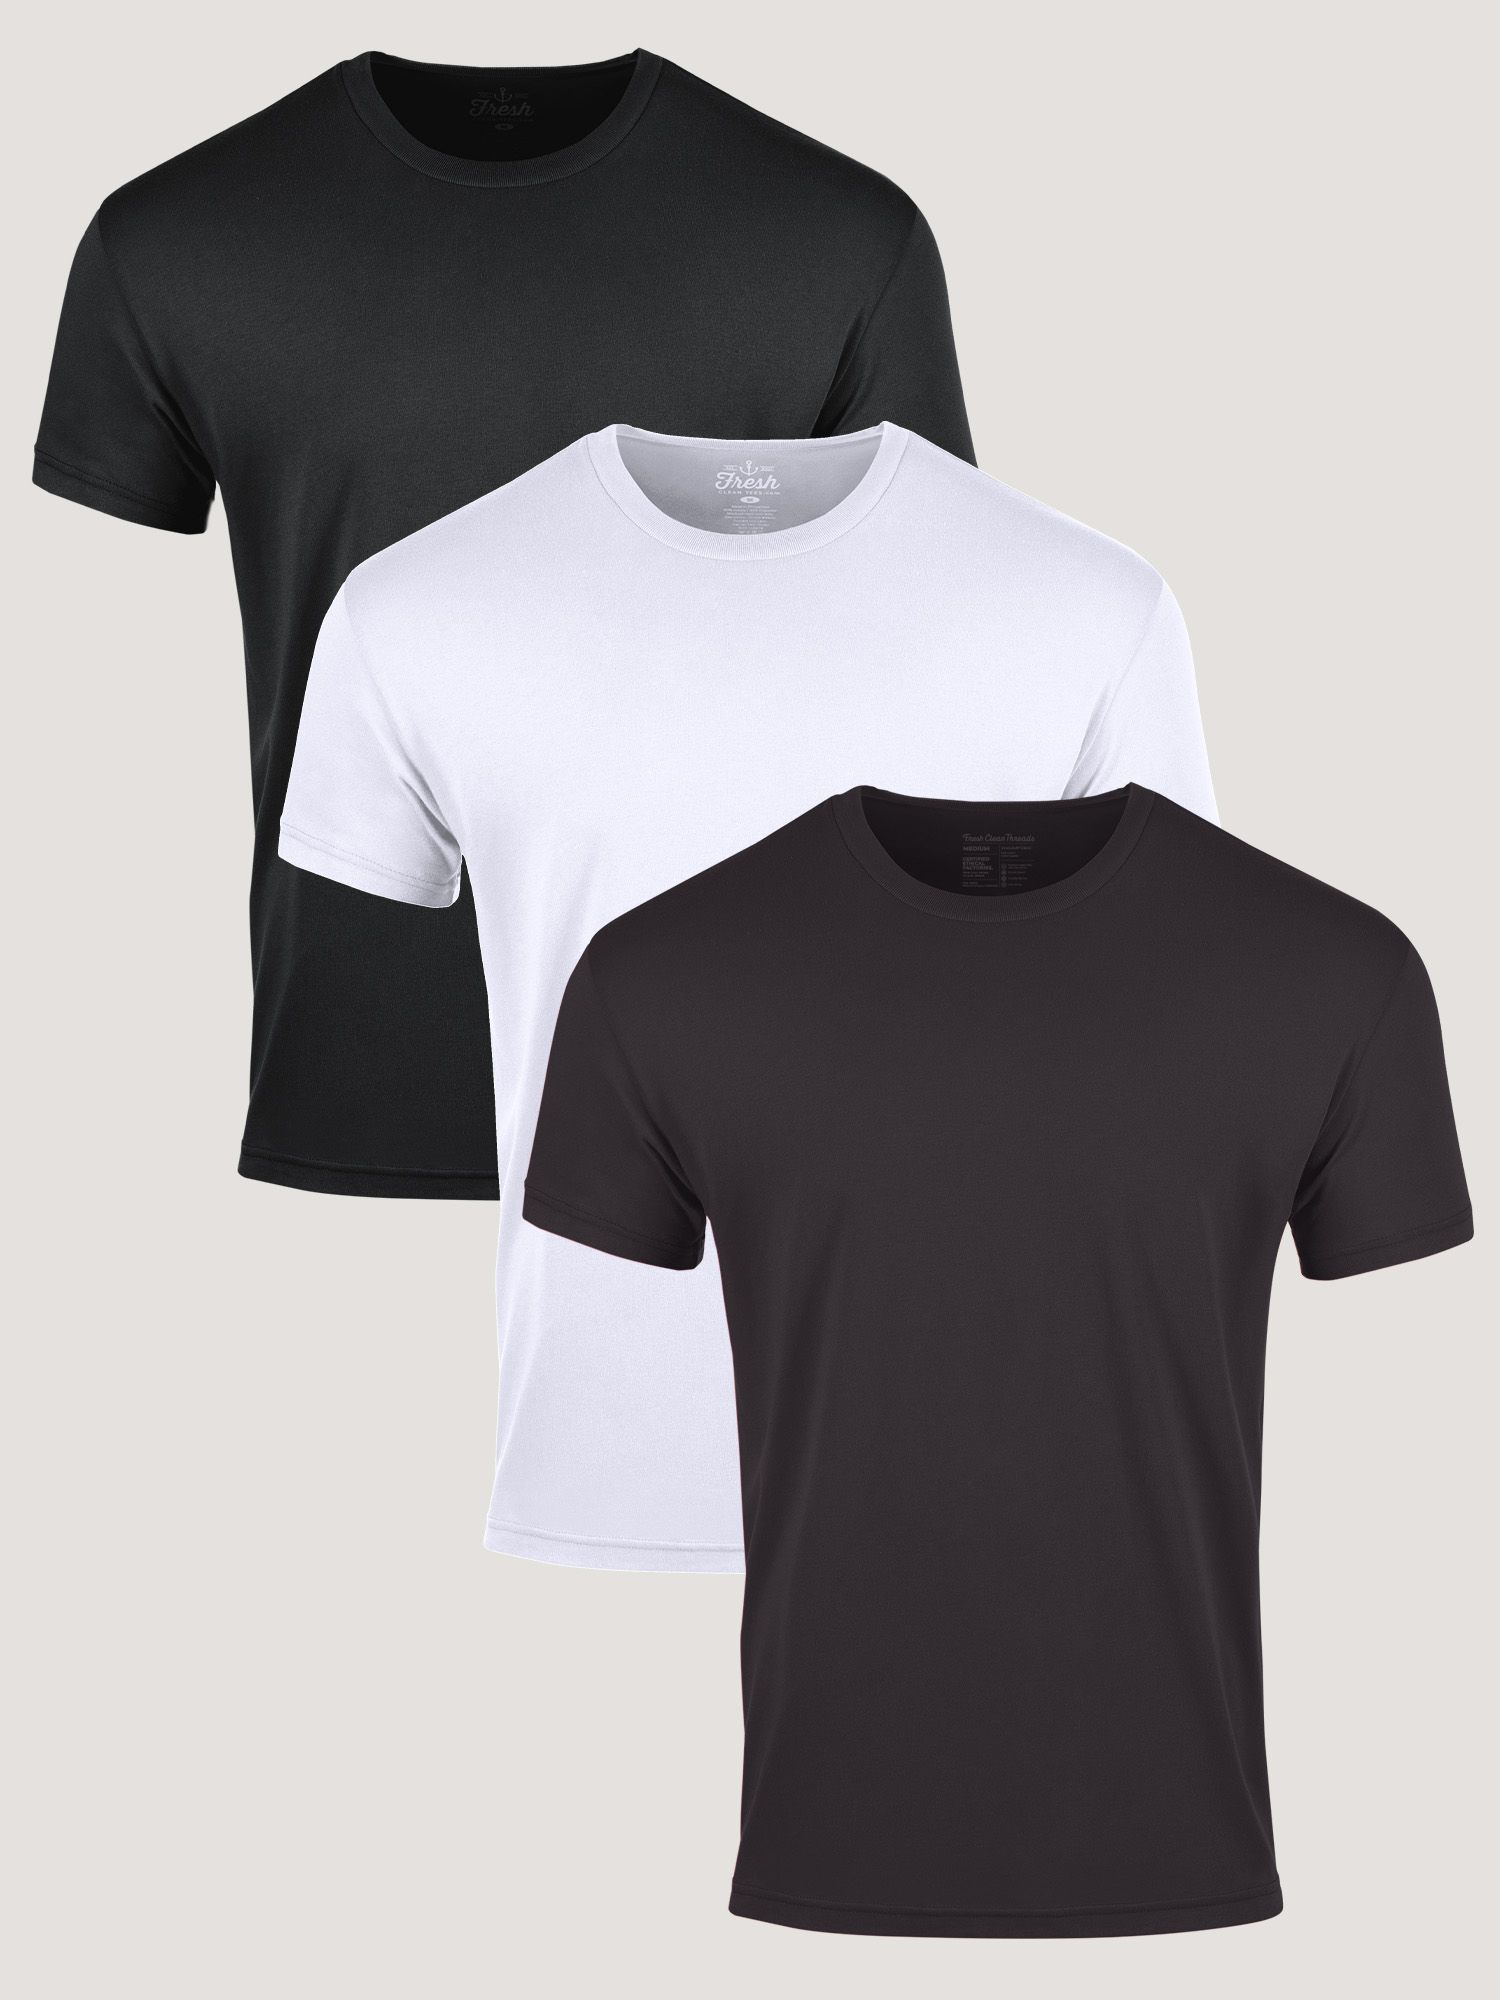 PnG Round Neck T.shirt Plain T Shirt, Quantity Per Pack: Single Poly